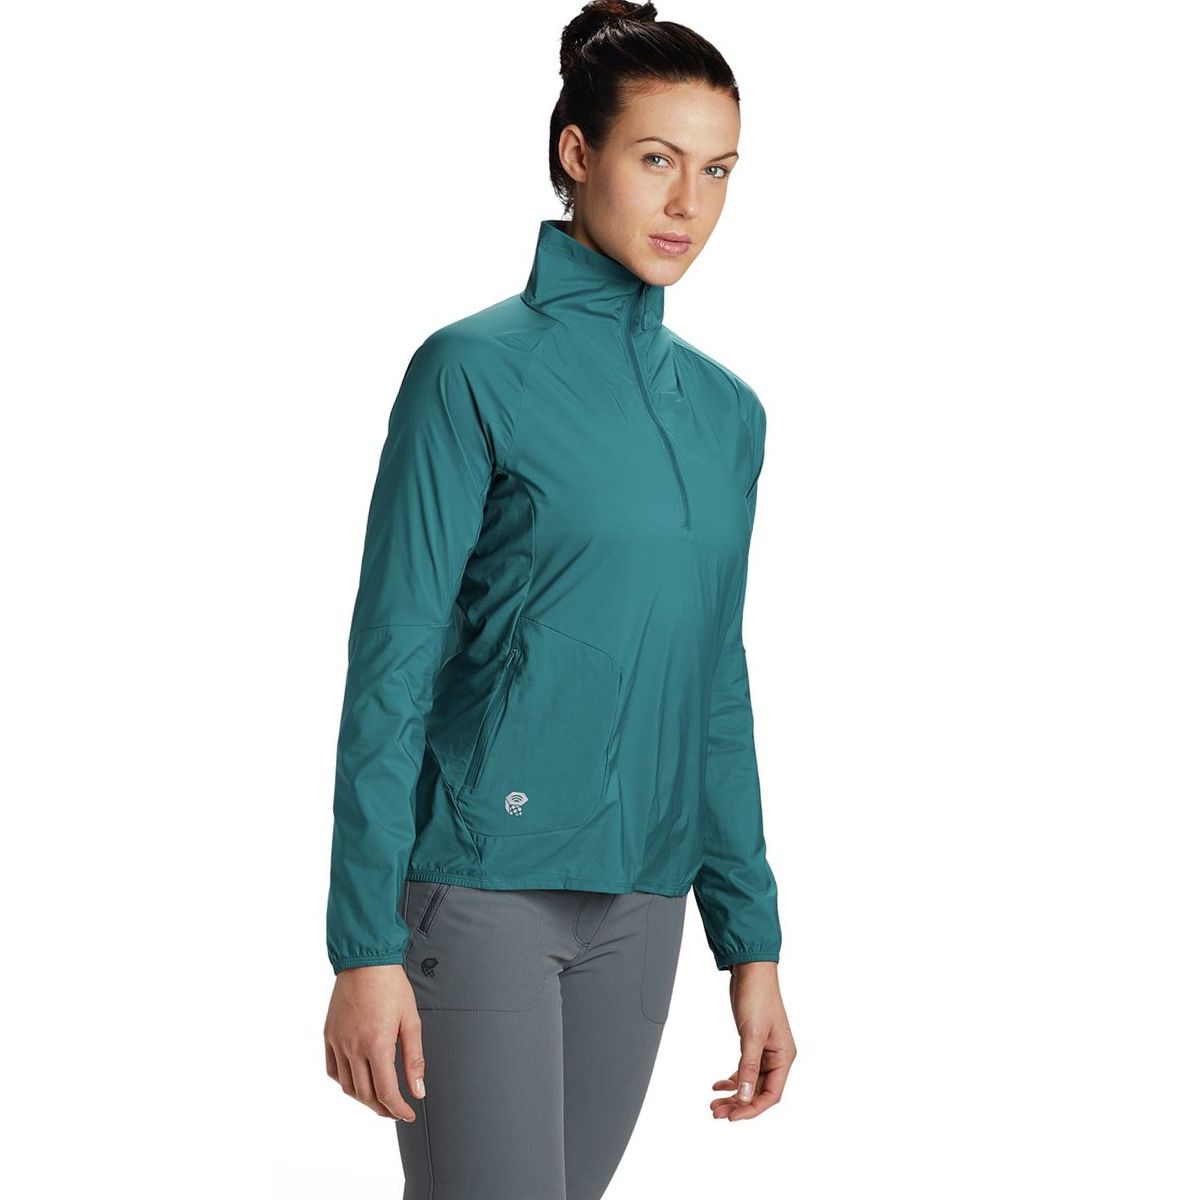 Mountain Hardwear Kor Preshell Pullover Jacket - Women's